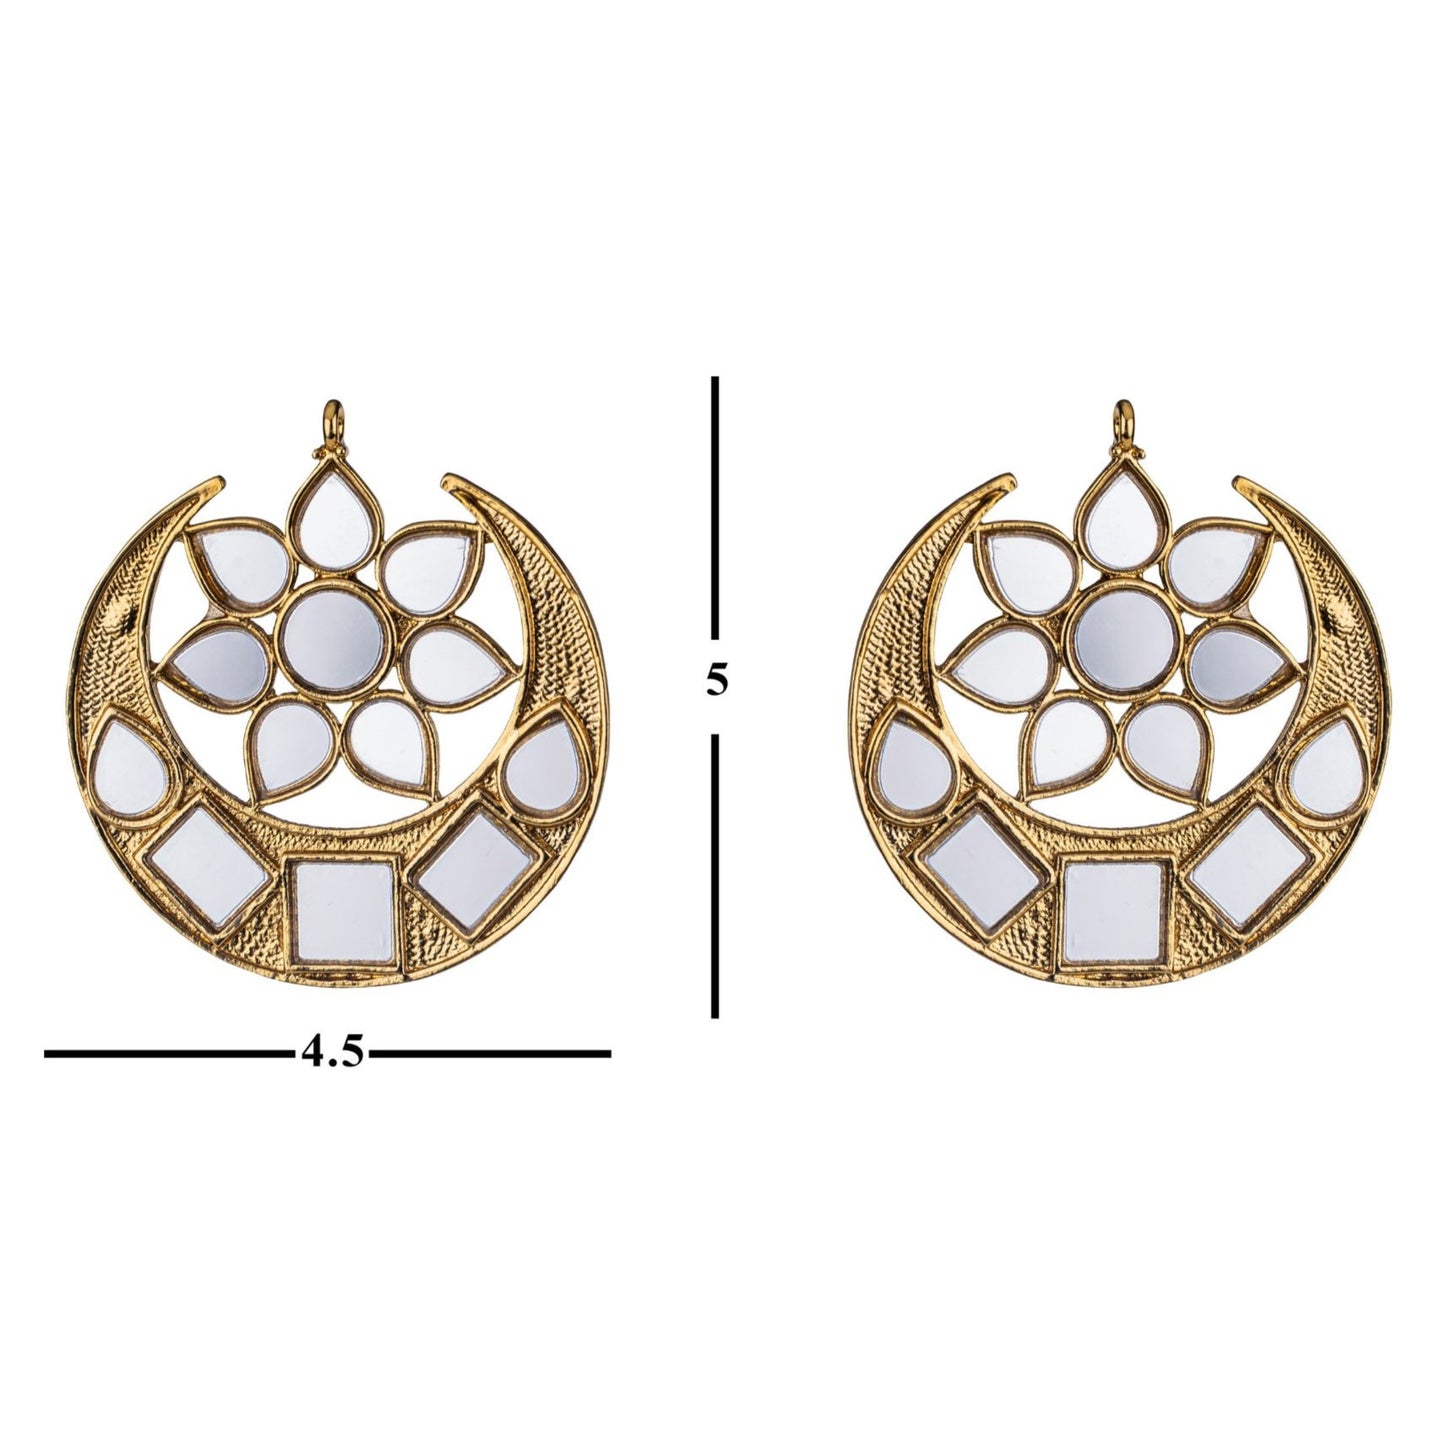 Bdiva 18K Gold Plated Cresent Moon Kundan Earrings.